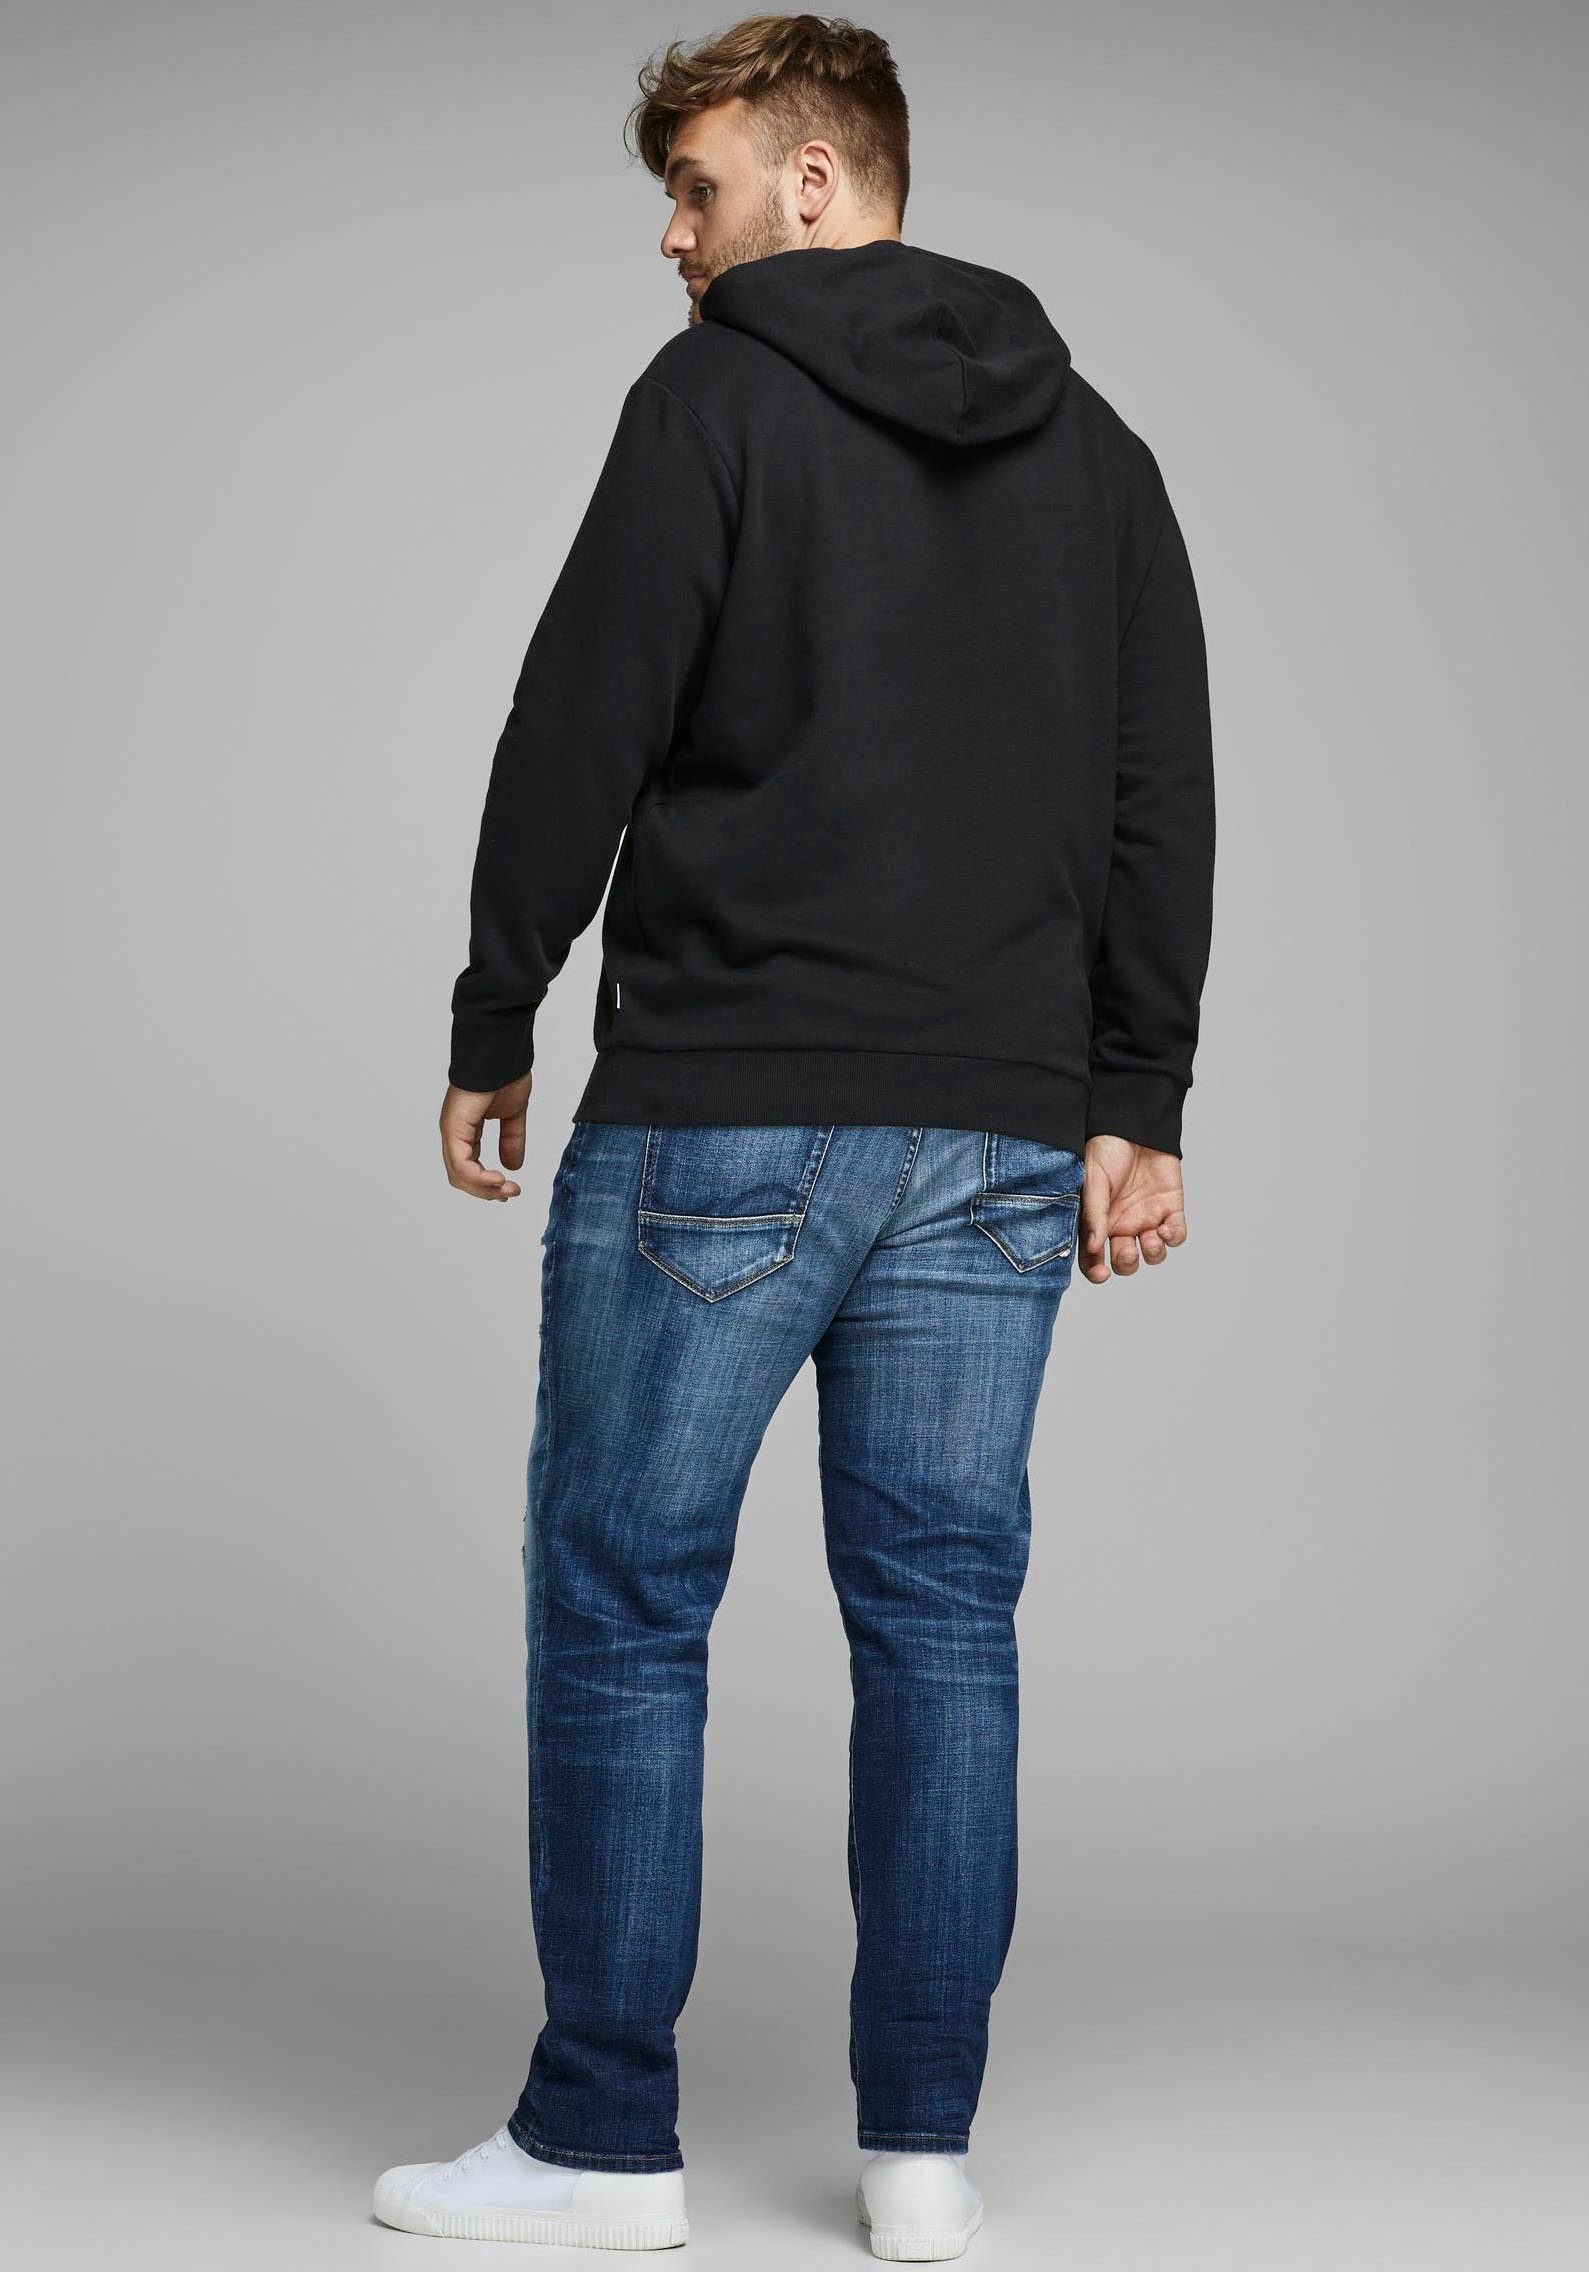 LOGO HOOD Kapuzensweatshirt Größe schwarz PlusSize CORP Jones Jack 6XL Bis SWEAT &